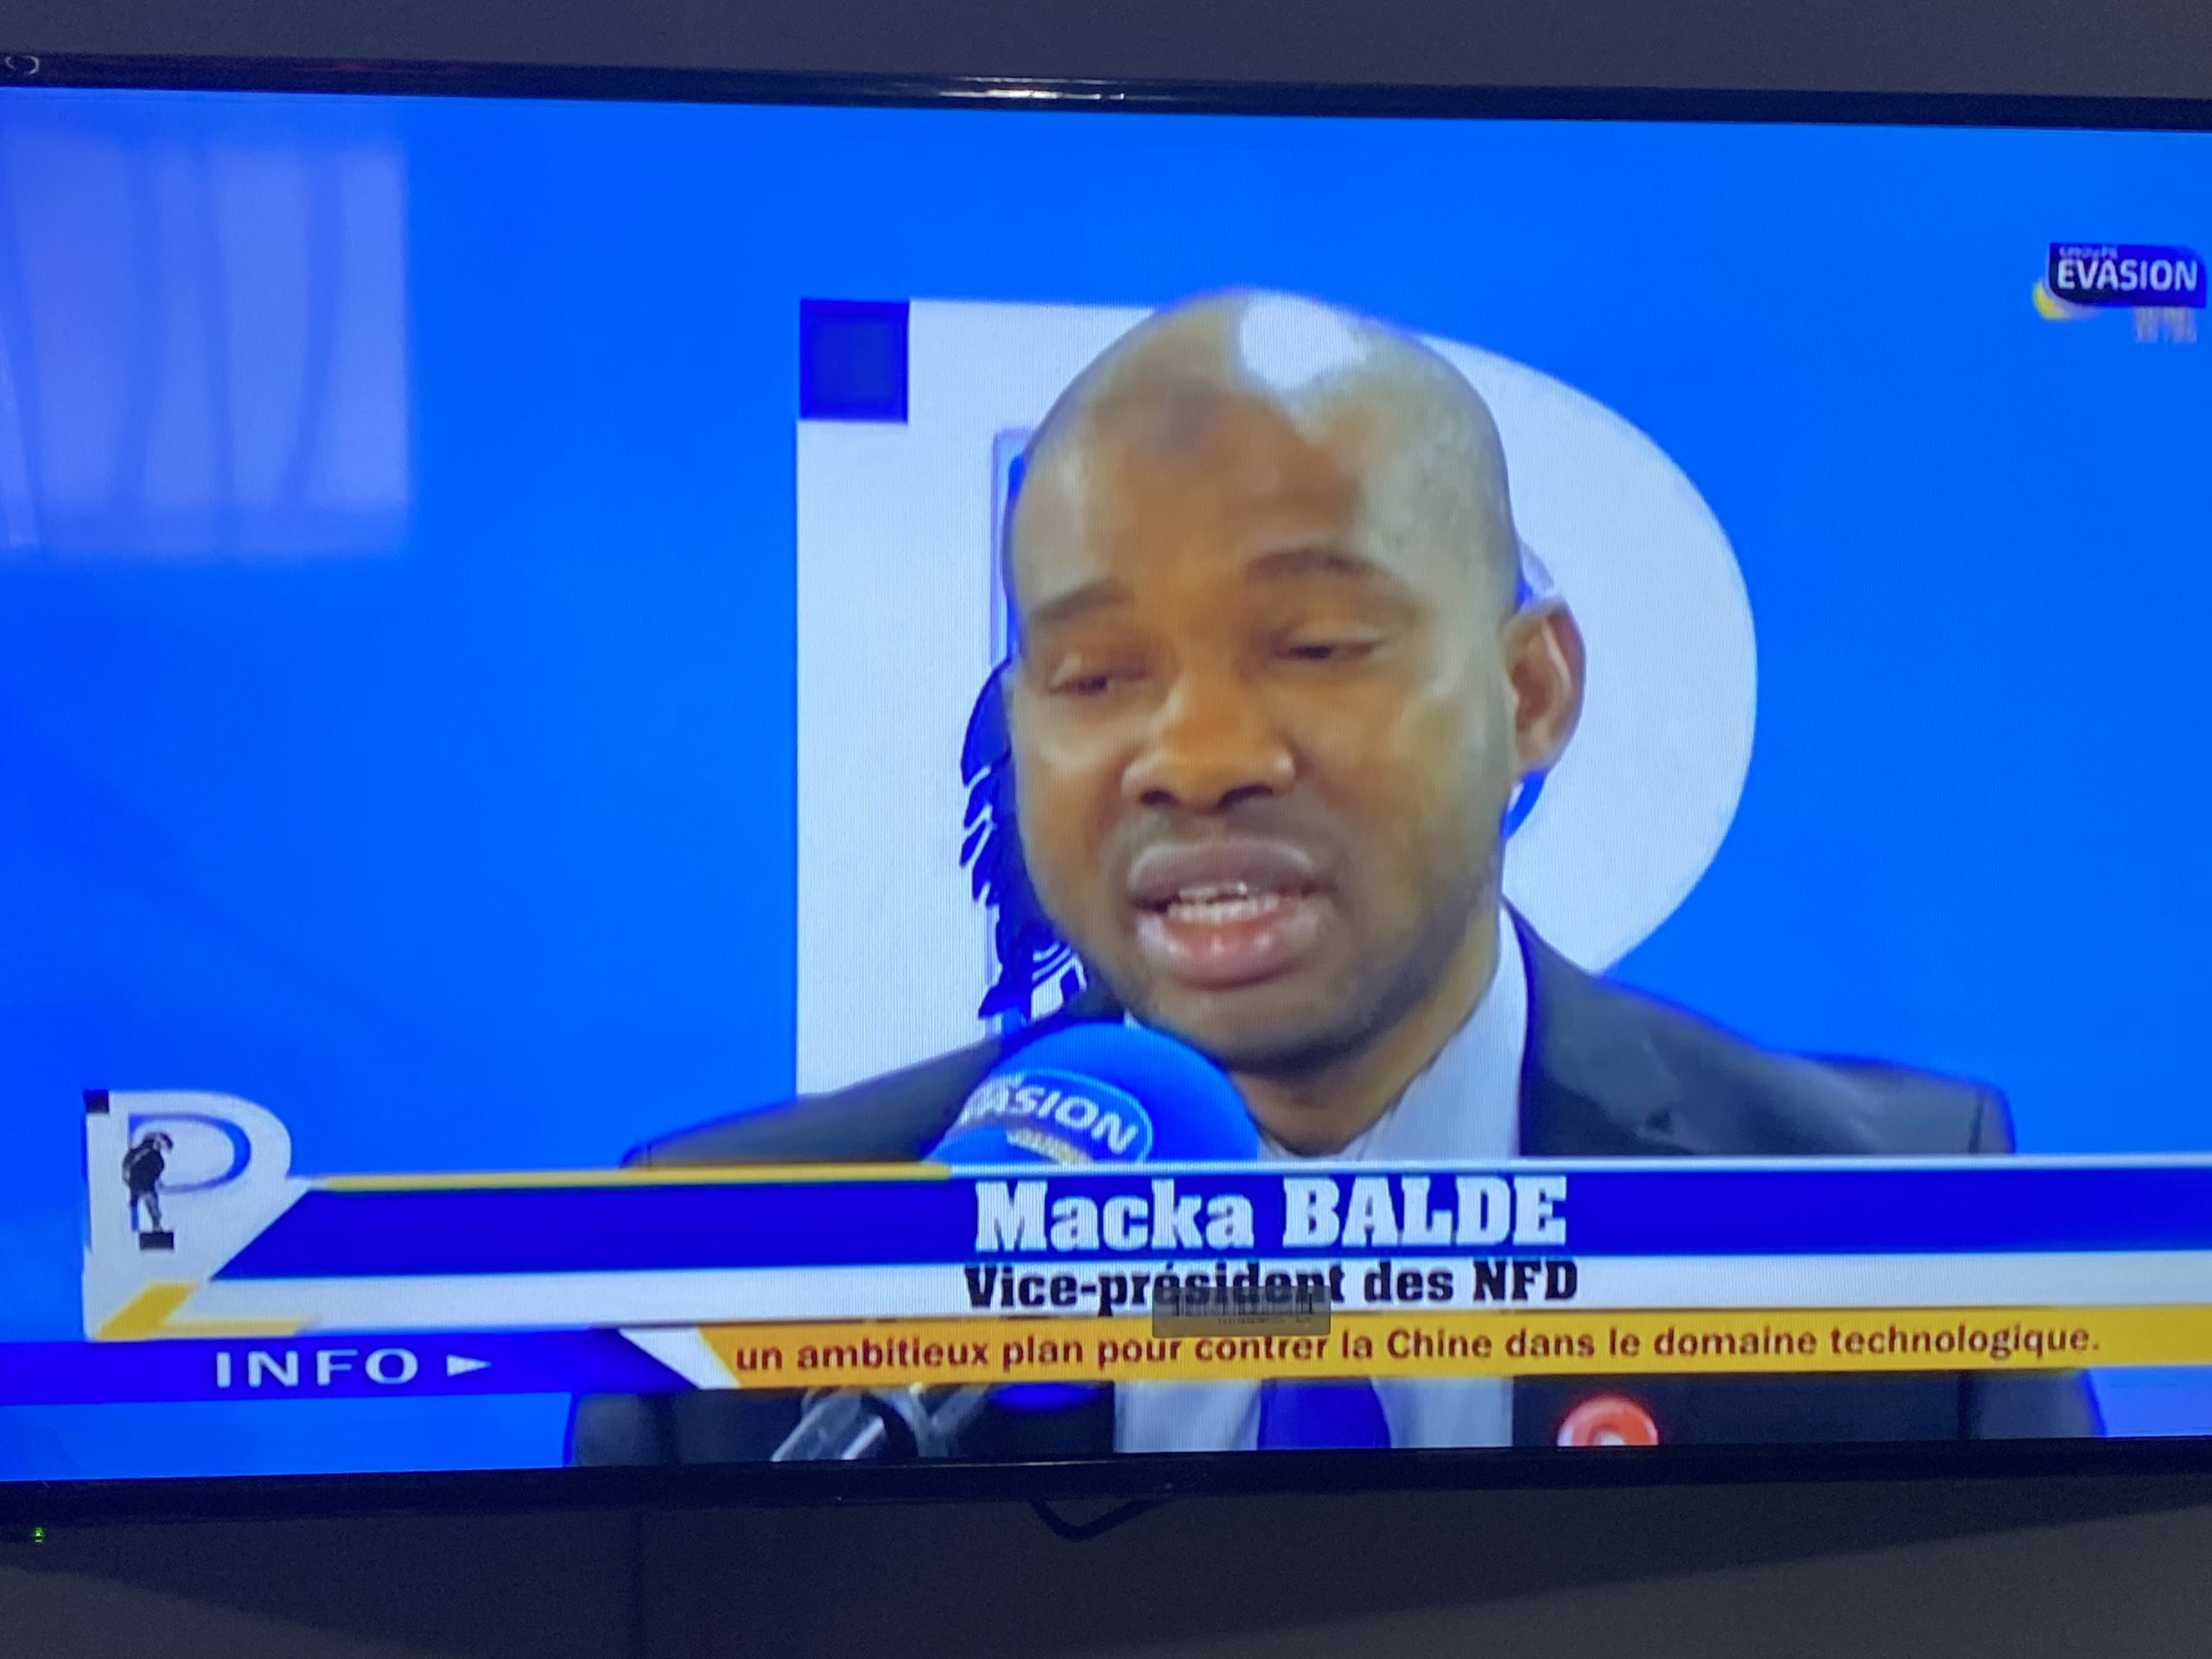 Macka Balde vice-président des NFD et DGA ANVJ SUR EVASION TV